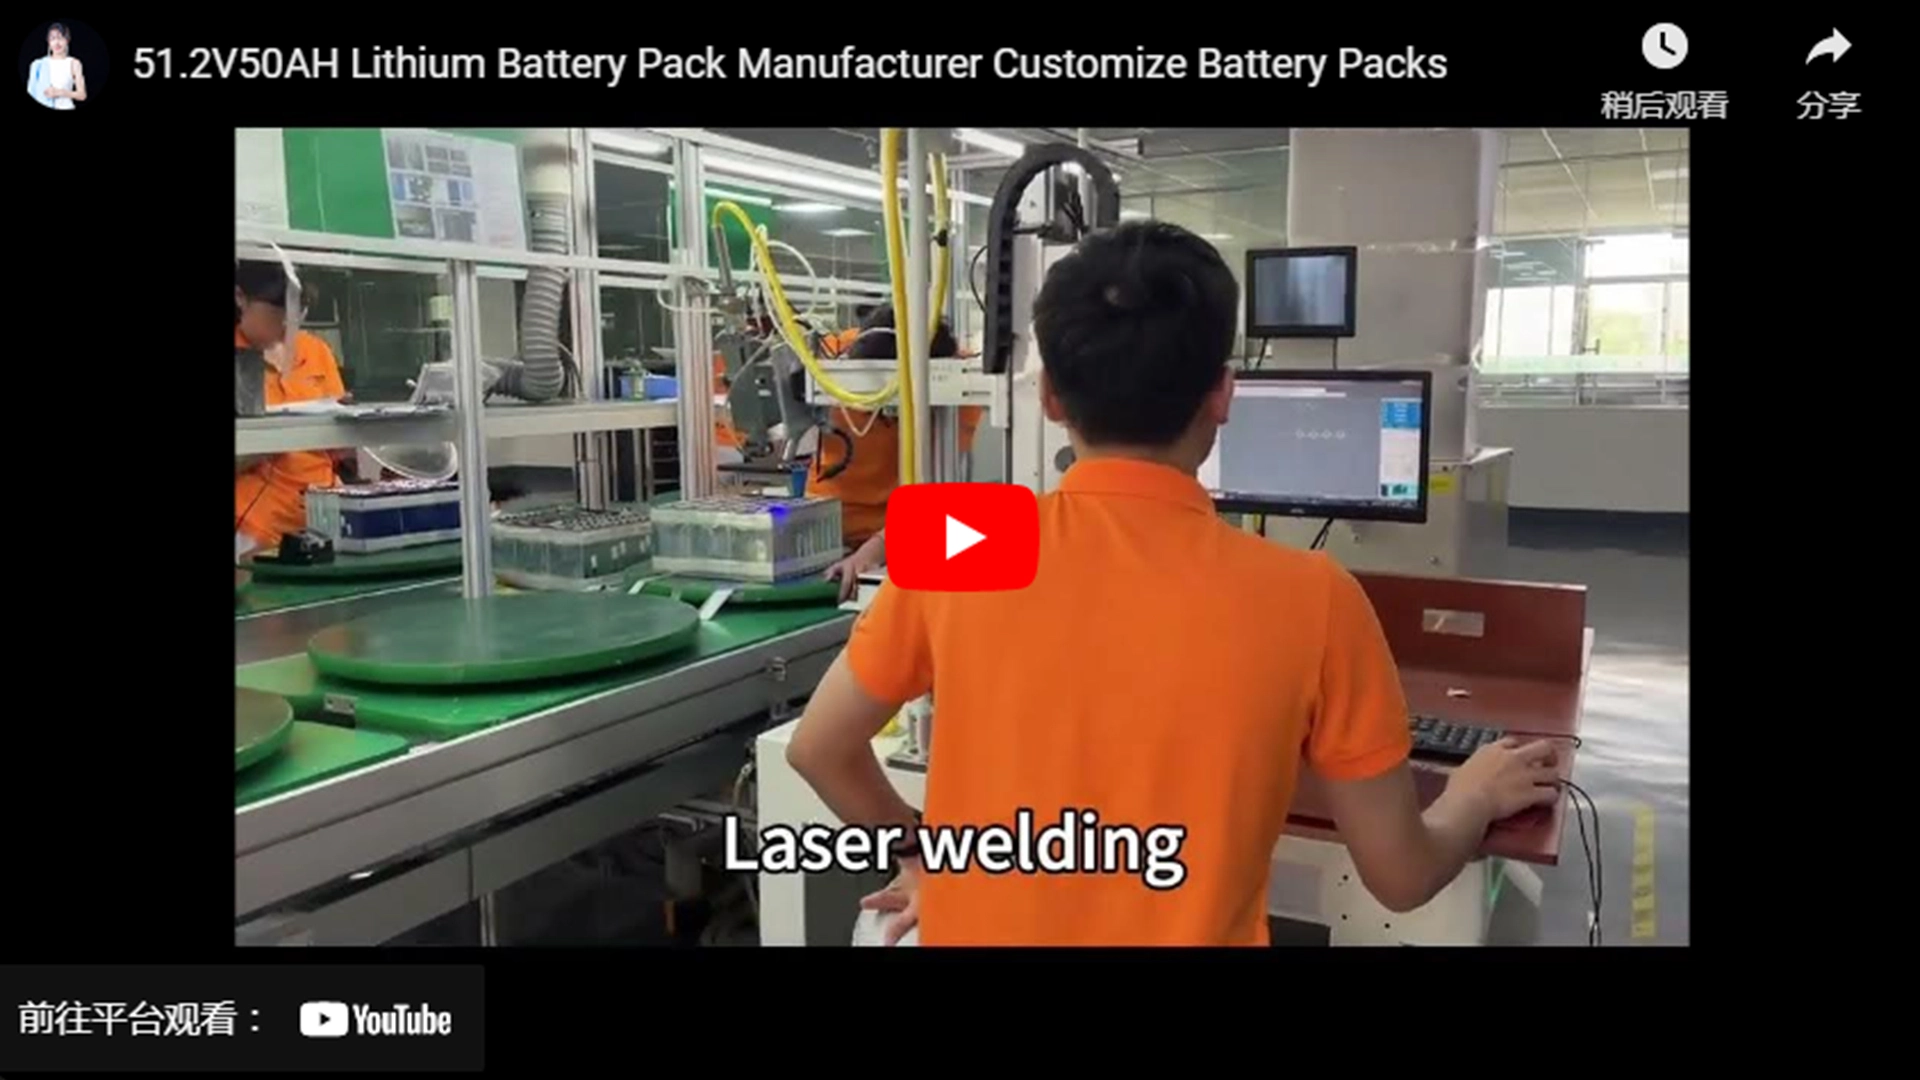 51.2V50AH Lithium Battery Pack Manufacturer Customize Battery Packs